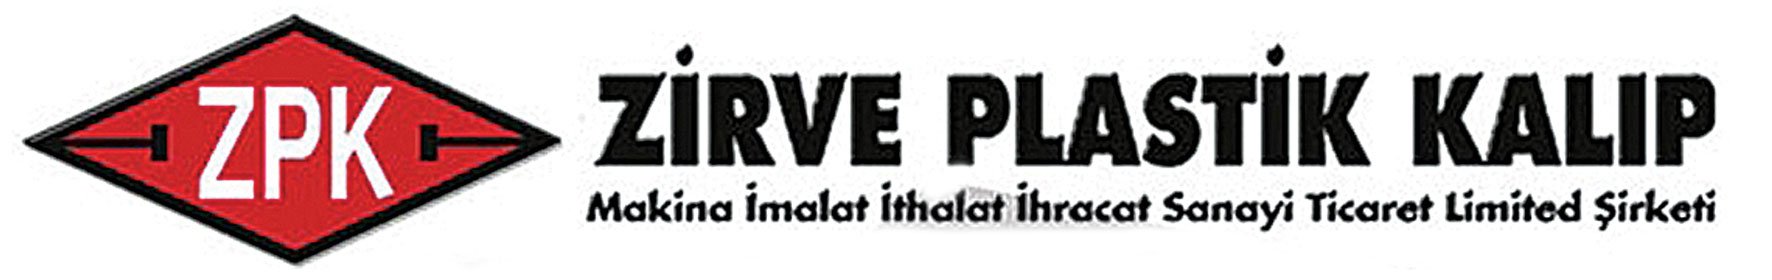 Zirve Plastik Kalıp Mak. iml. Imp. Ihr. Singing. and Tic. Ltd. Sti.